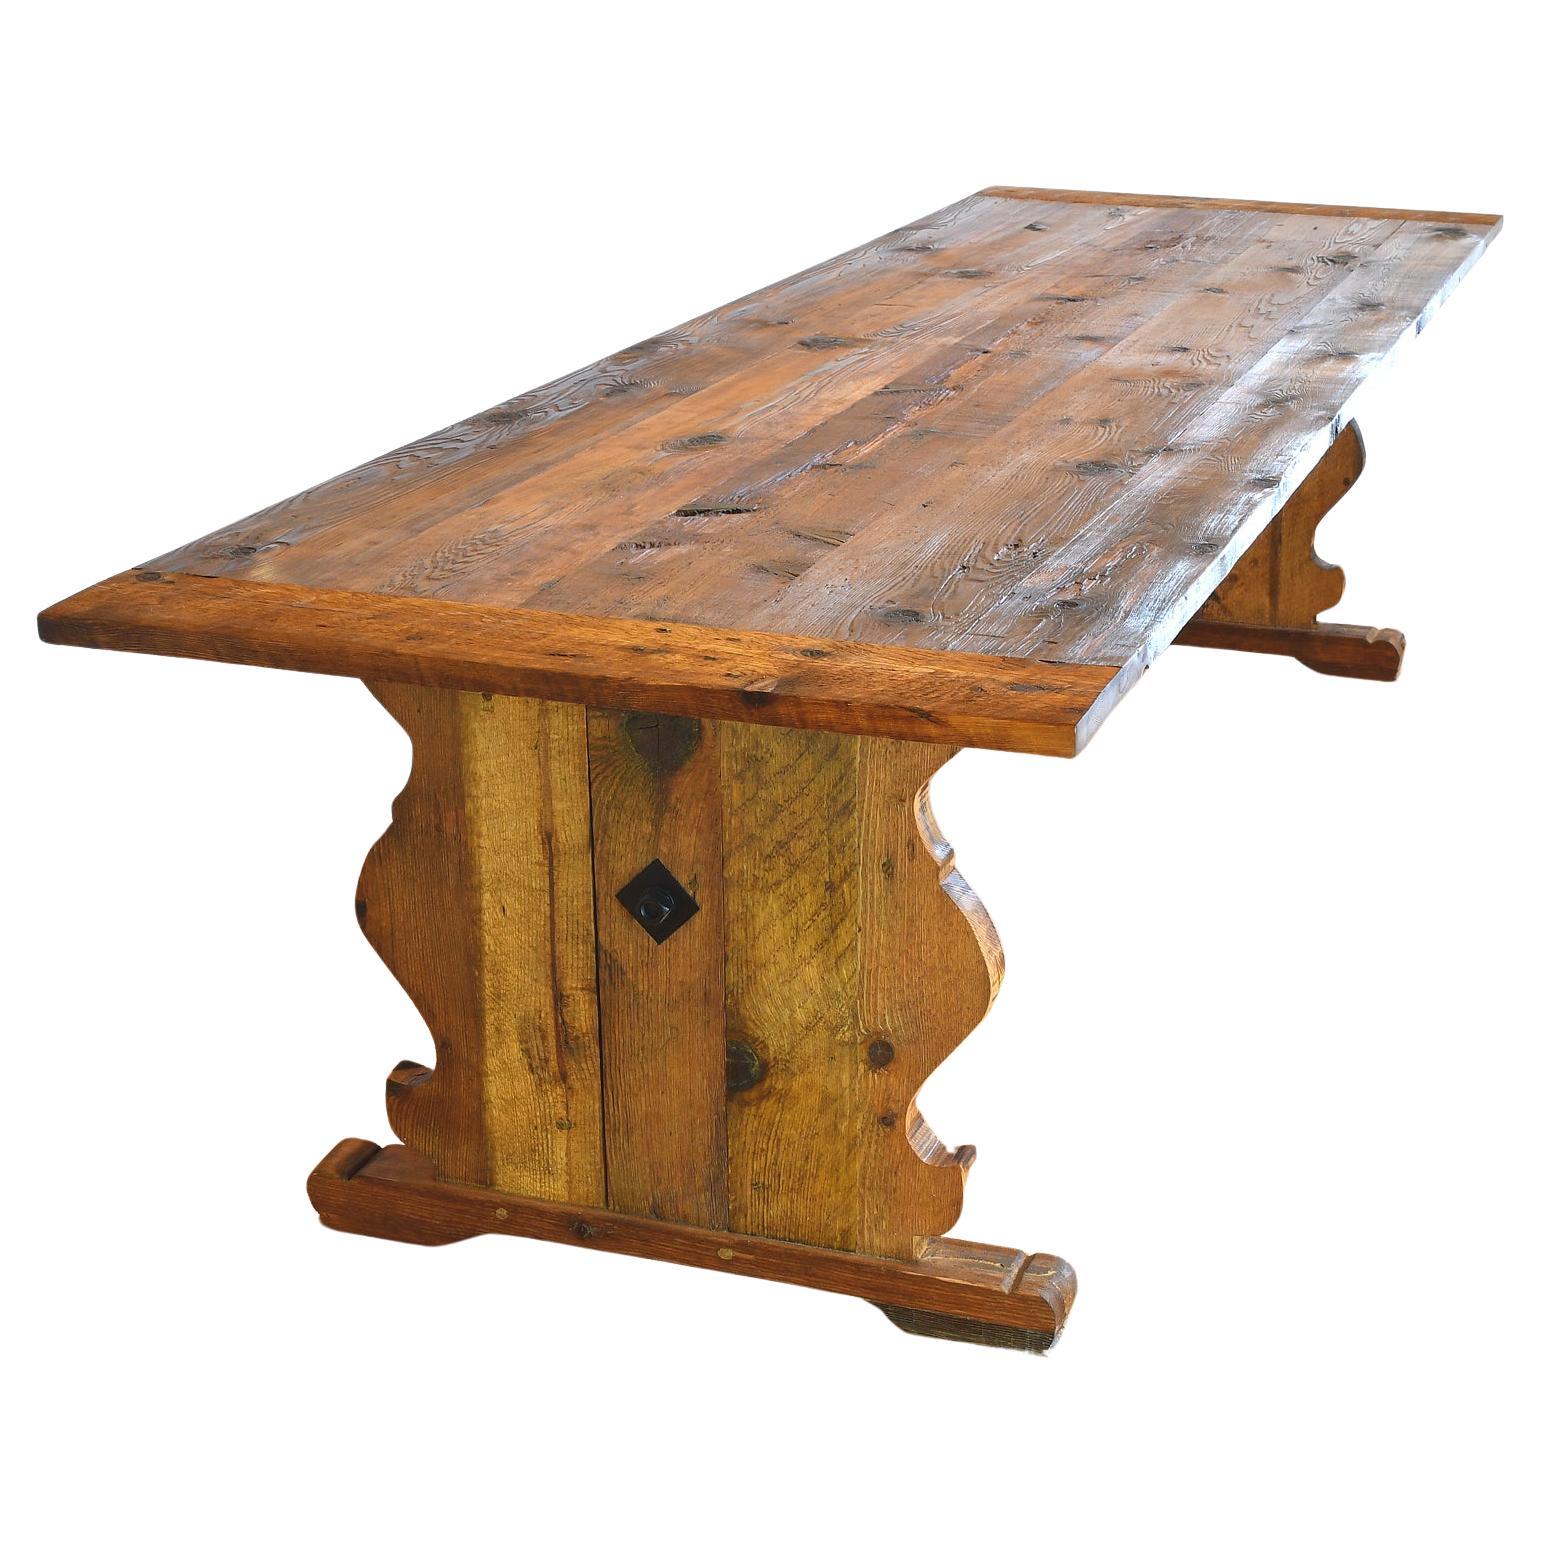 10' long Swedish Farm Table Made From Repurposed Douglas Fir & Ponderosa Pine For Sale